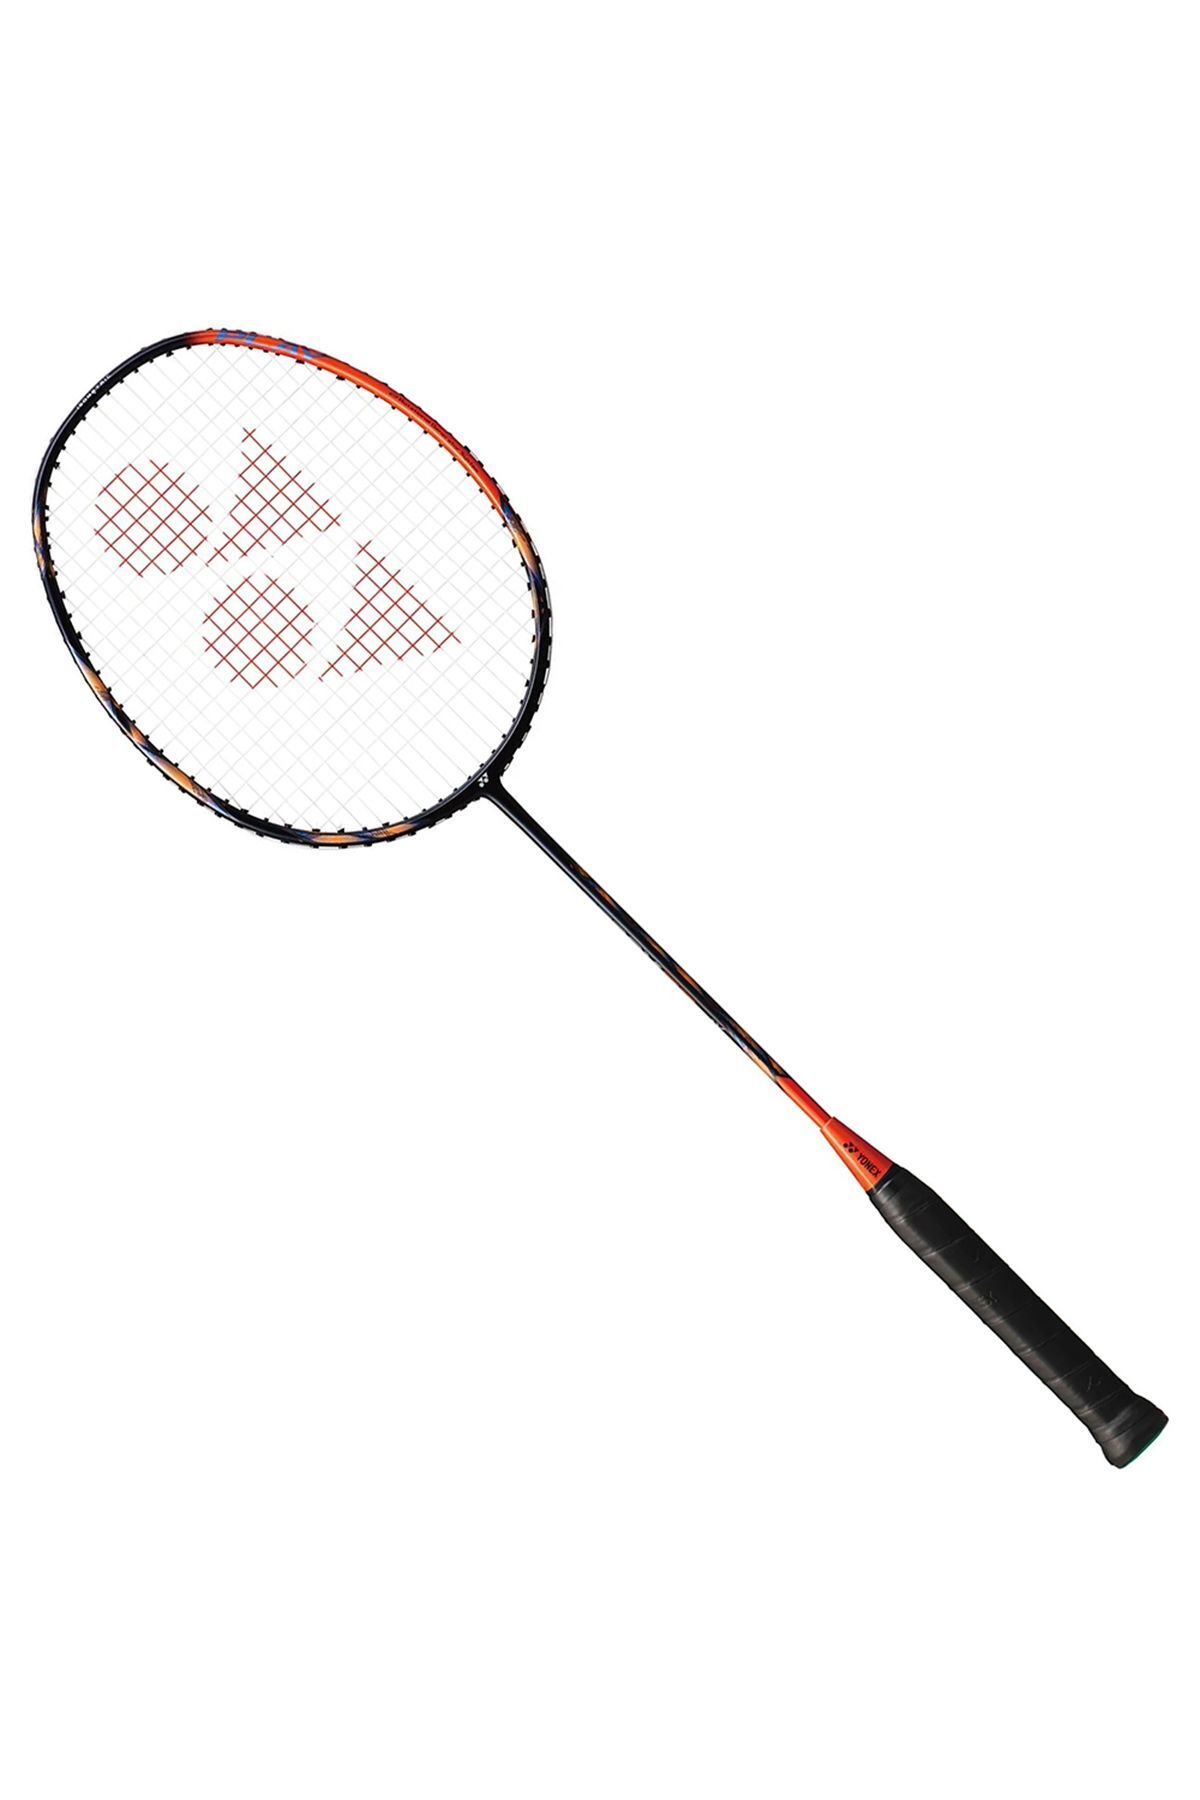 Yonex Astrox 77 Play Grafit Badminton Raketi